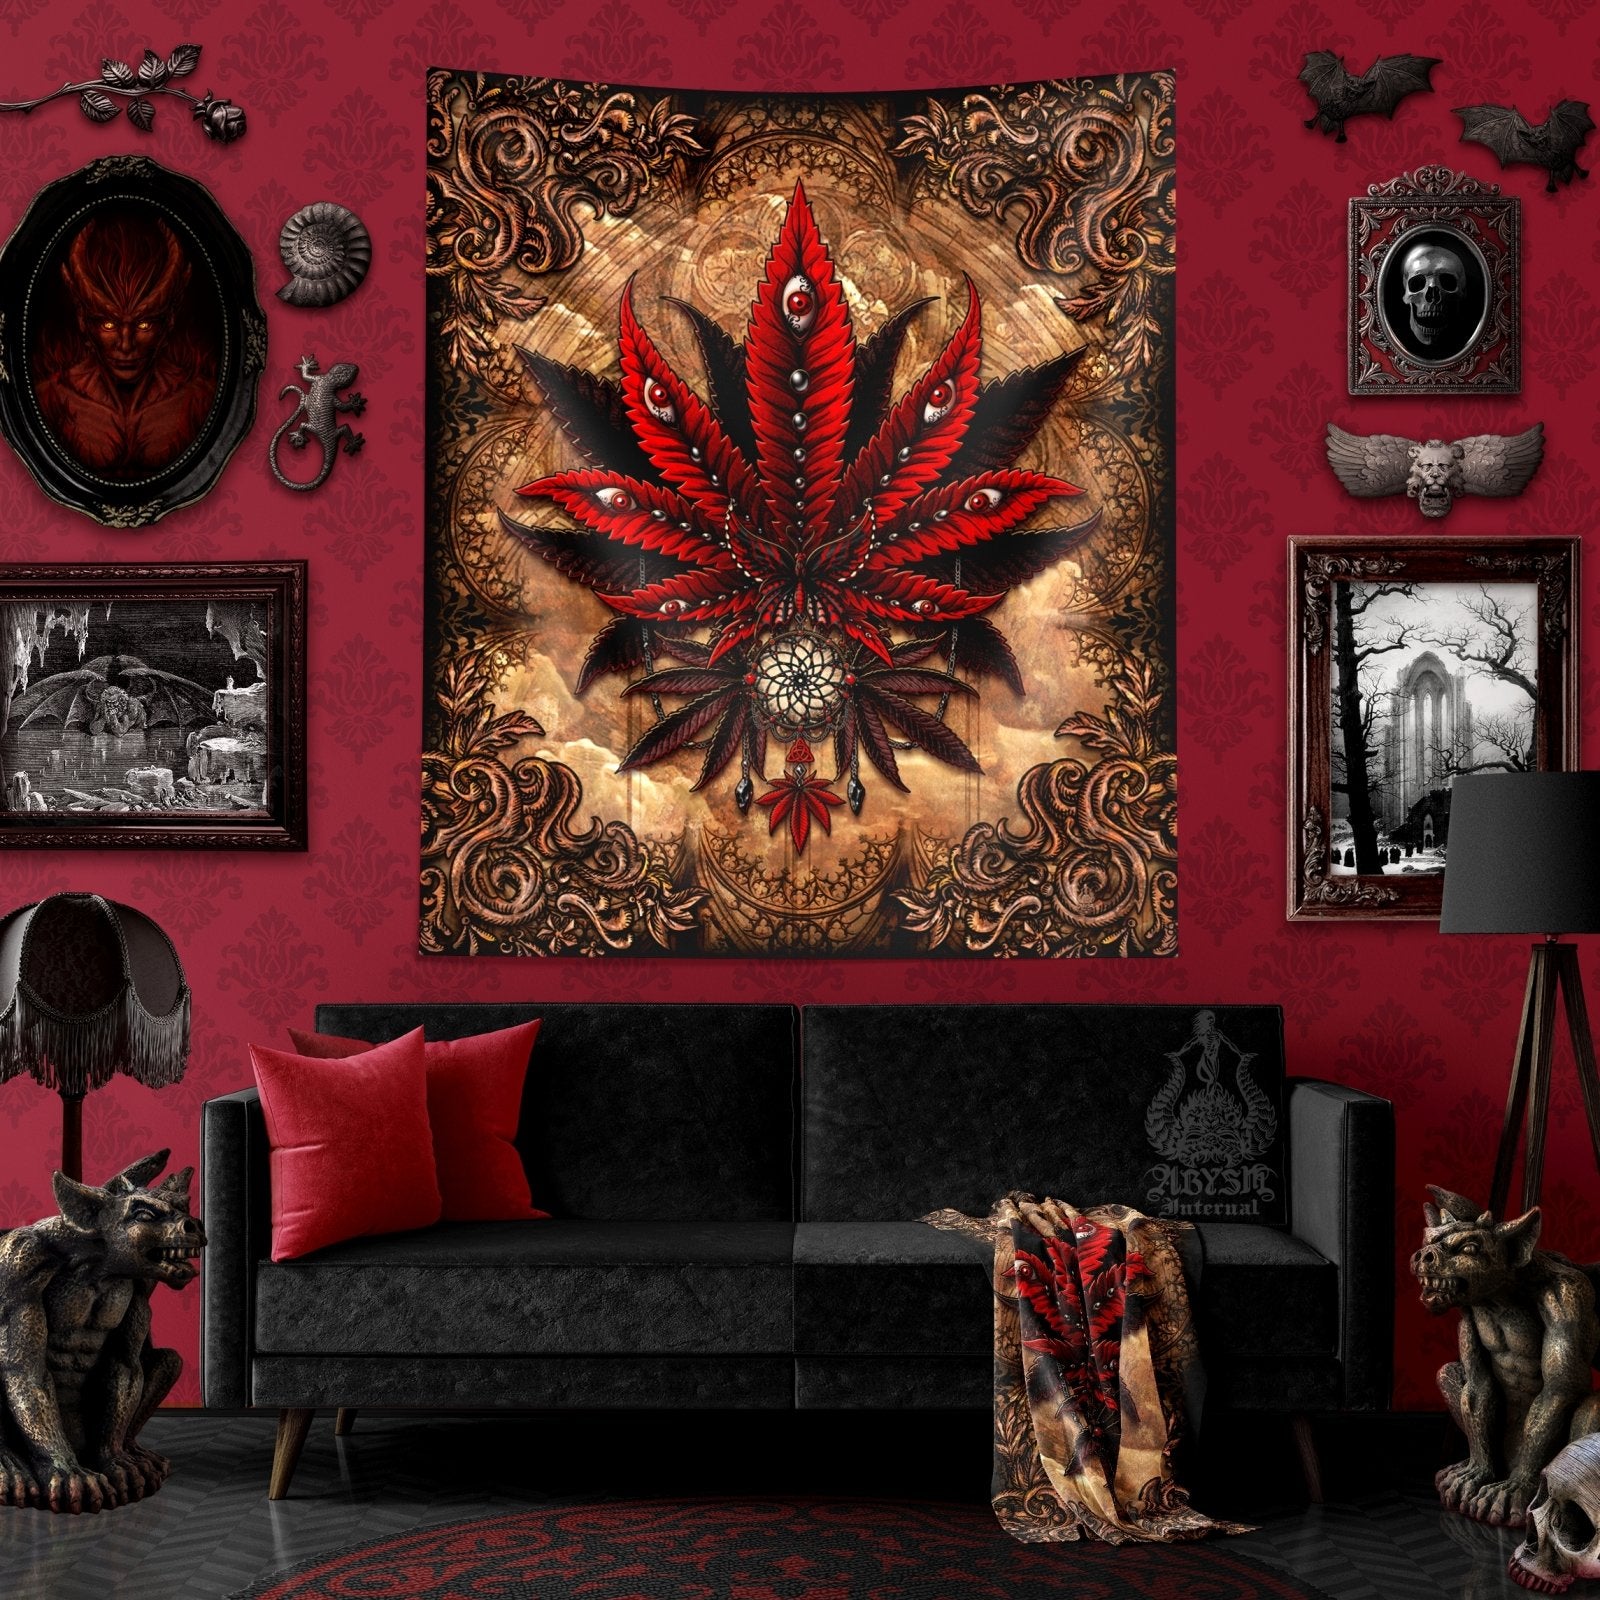 Gothic Weed Tapestry, Marijuana Shop Decor, Cannabis Wall Hanging, Goth Home Decor, Art Print, 420 Gift, Marijuana - Horror Beige - Abysm Internal